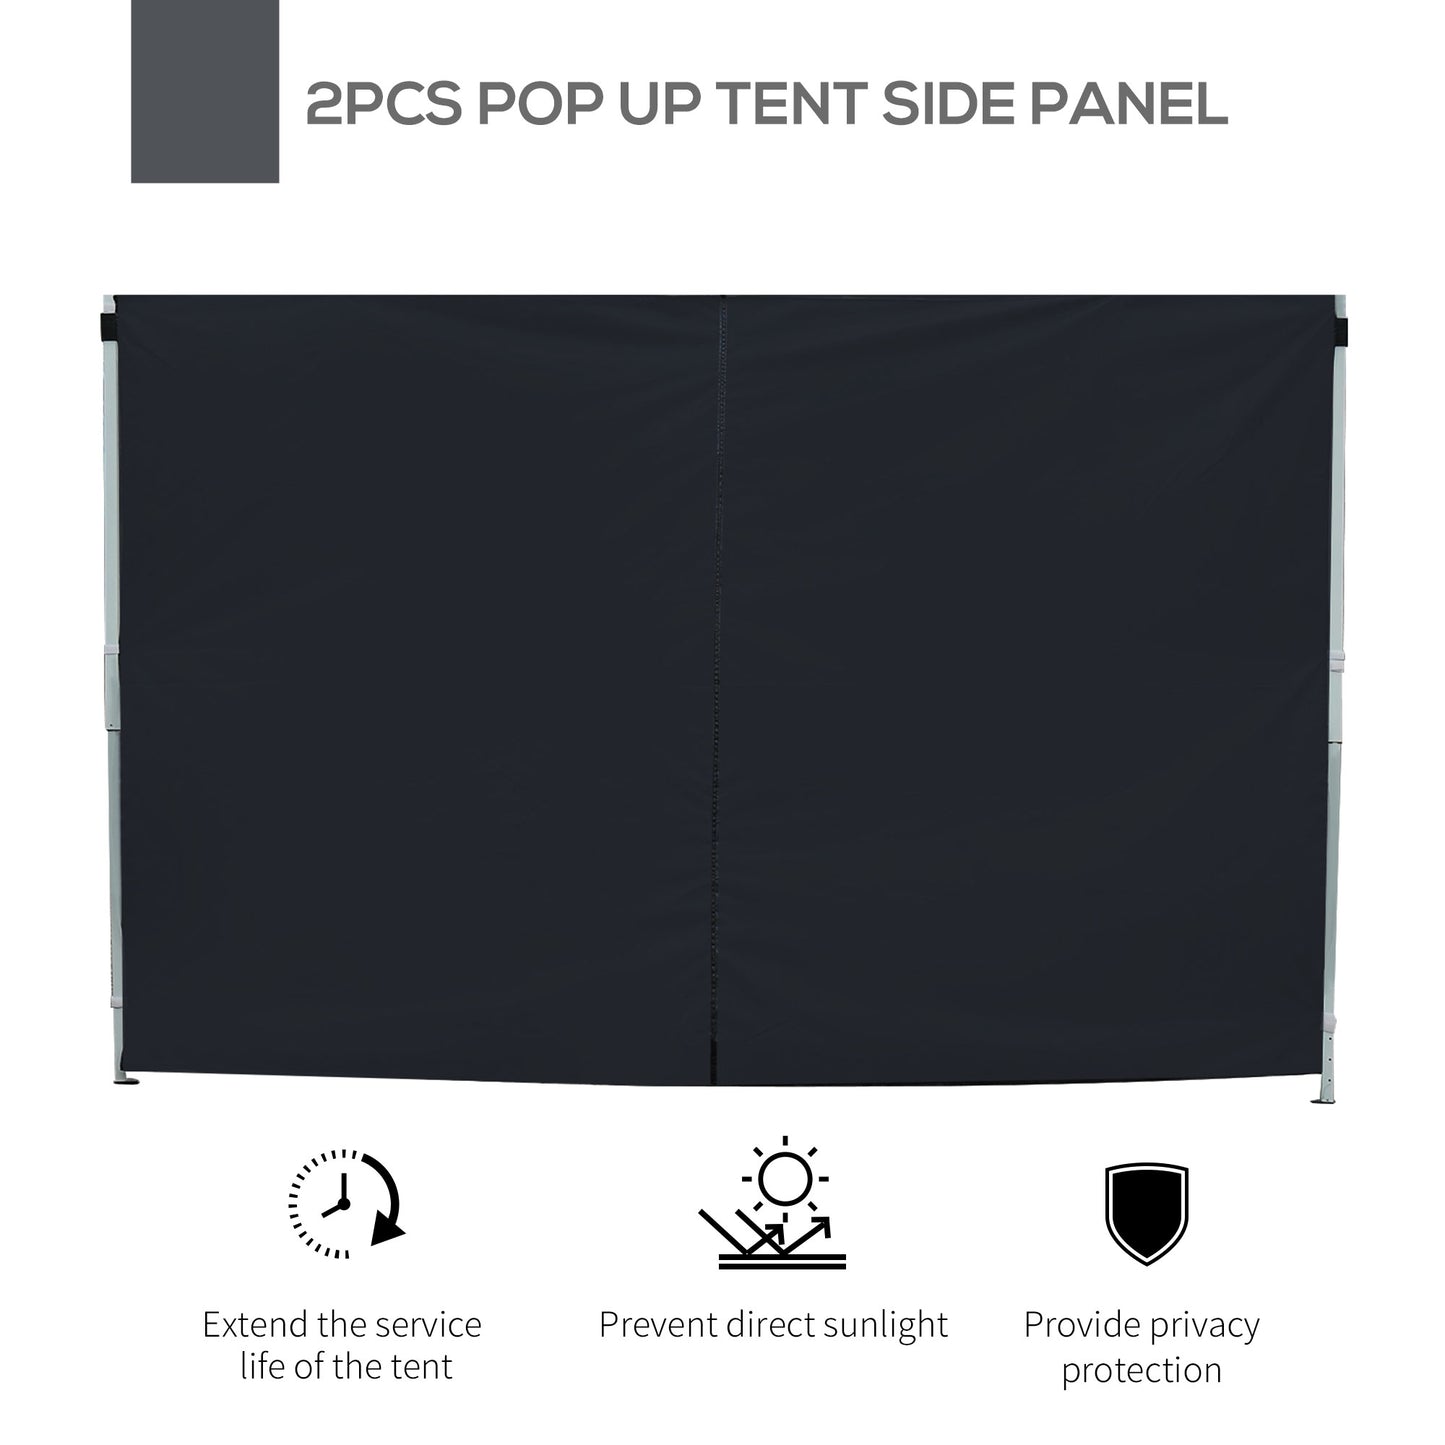 Outsunny 3m Gazebo Exchangeable Side Panels Wall-Black